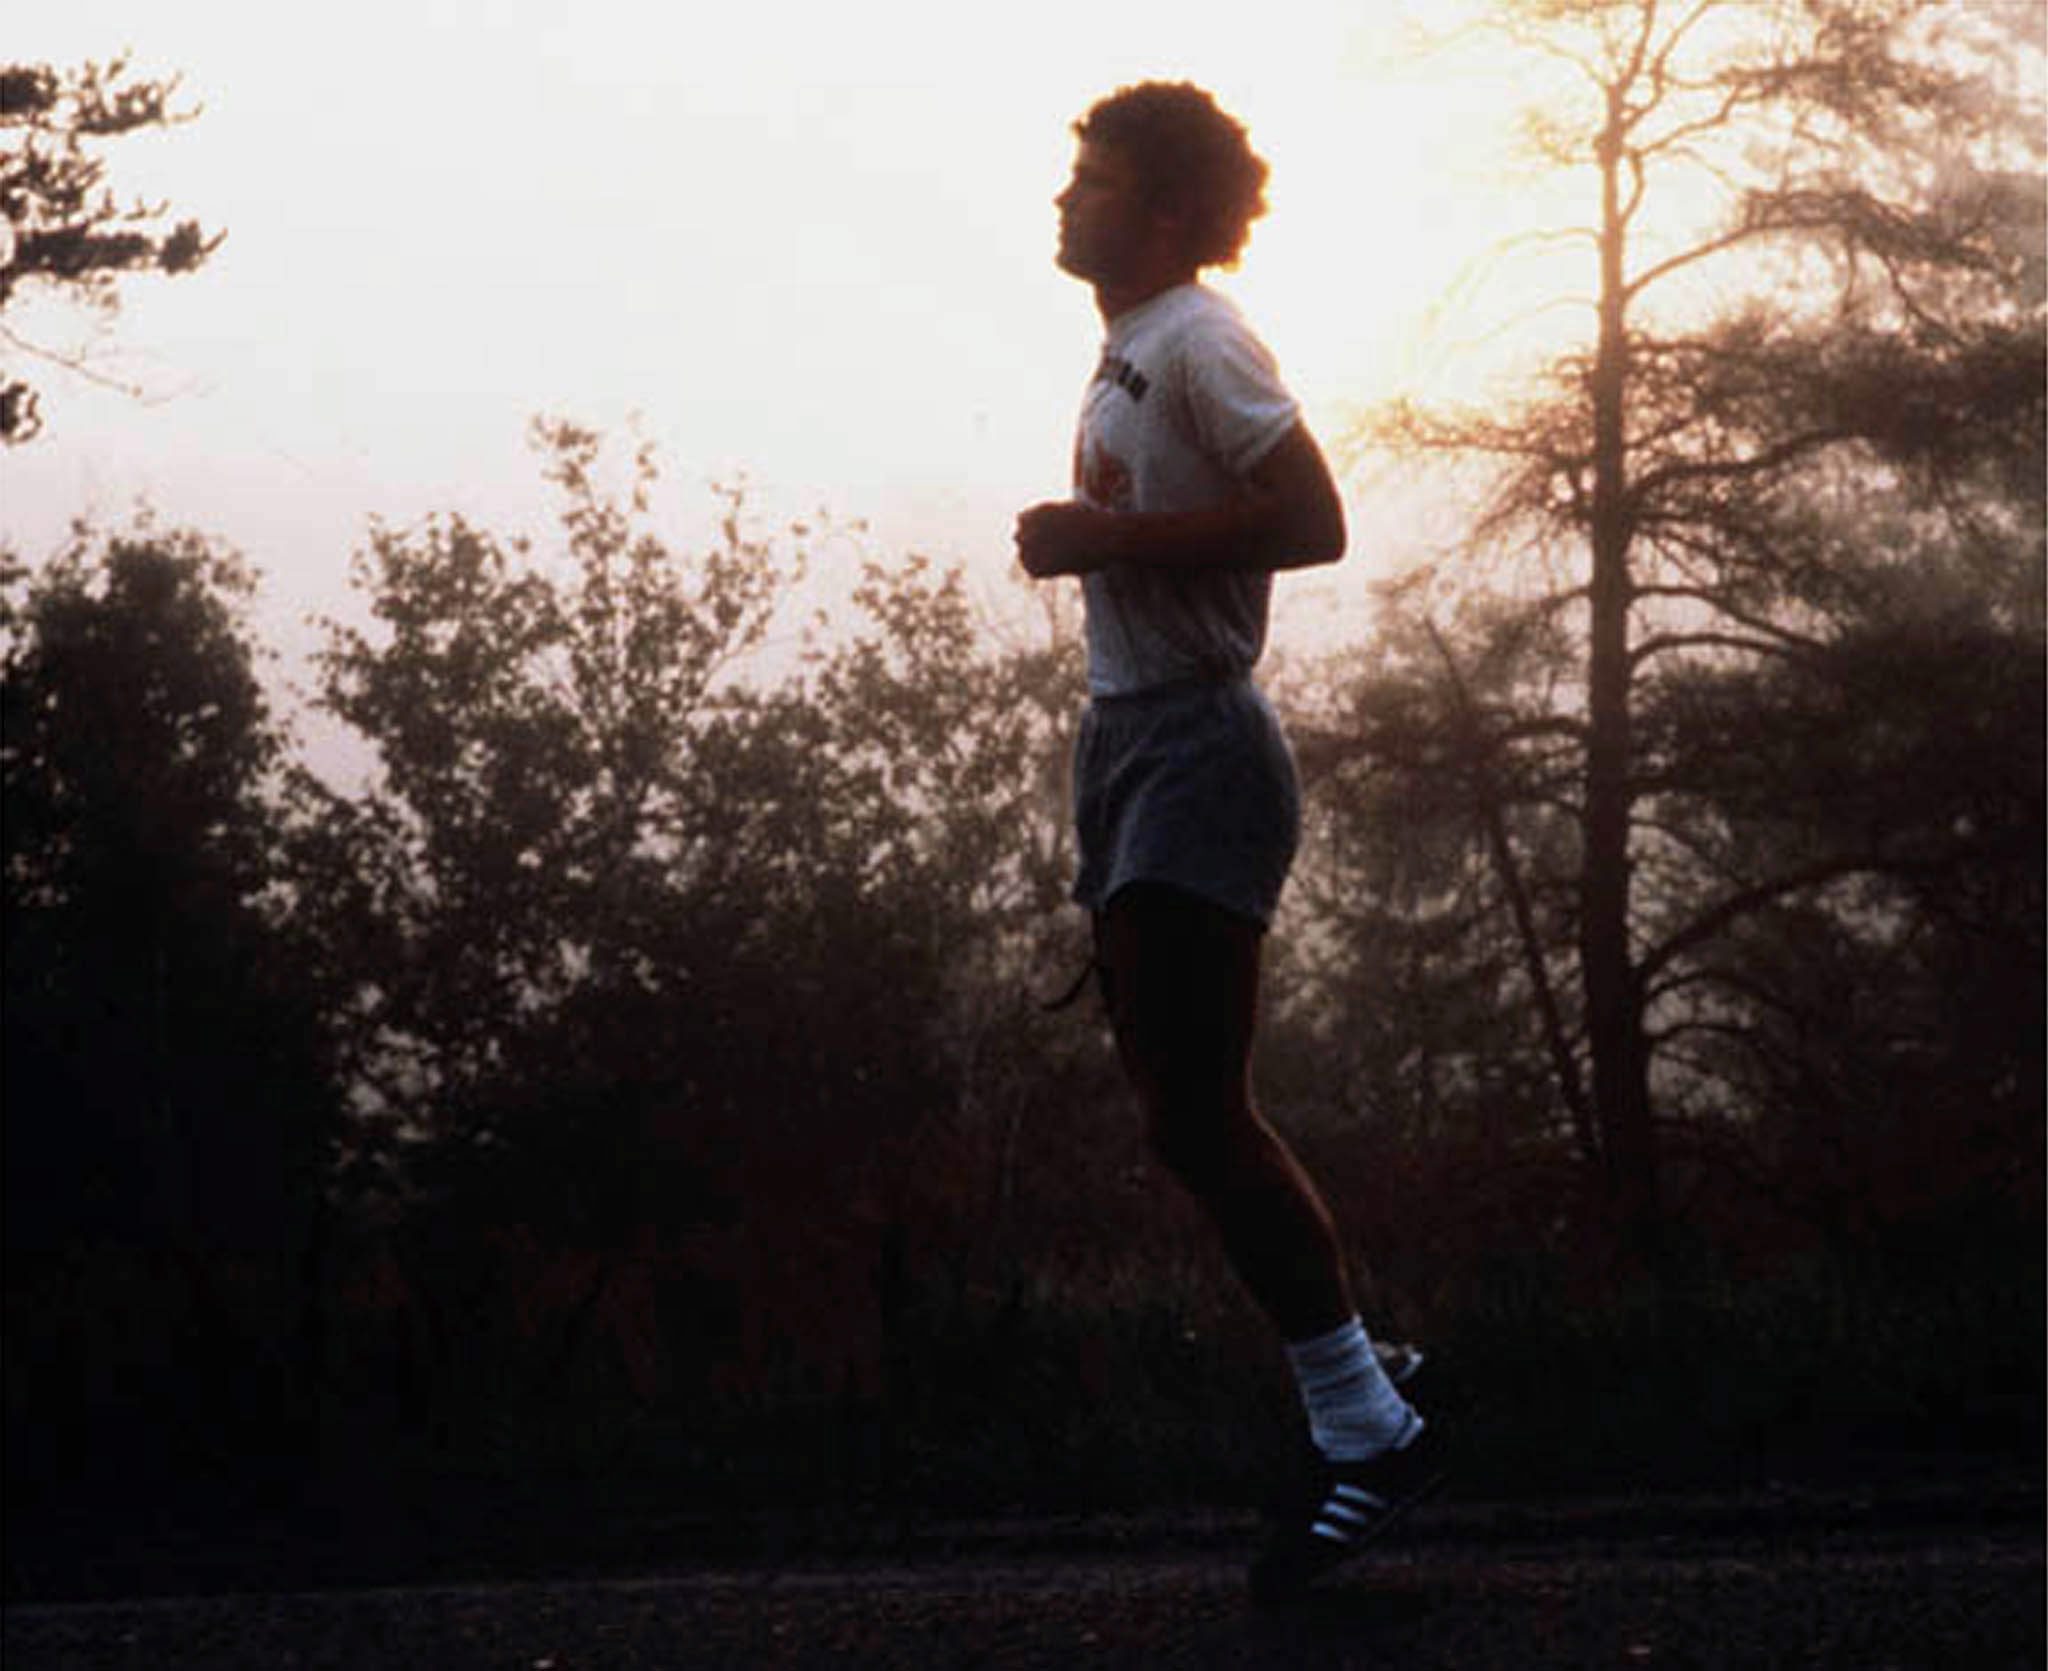 Runner Terry Fox continues his Marathon of Hope run across Canada, Sept. 1980. (CP PHOTO/ files)